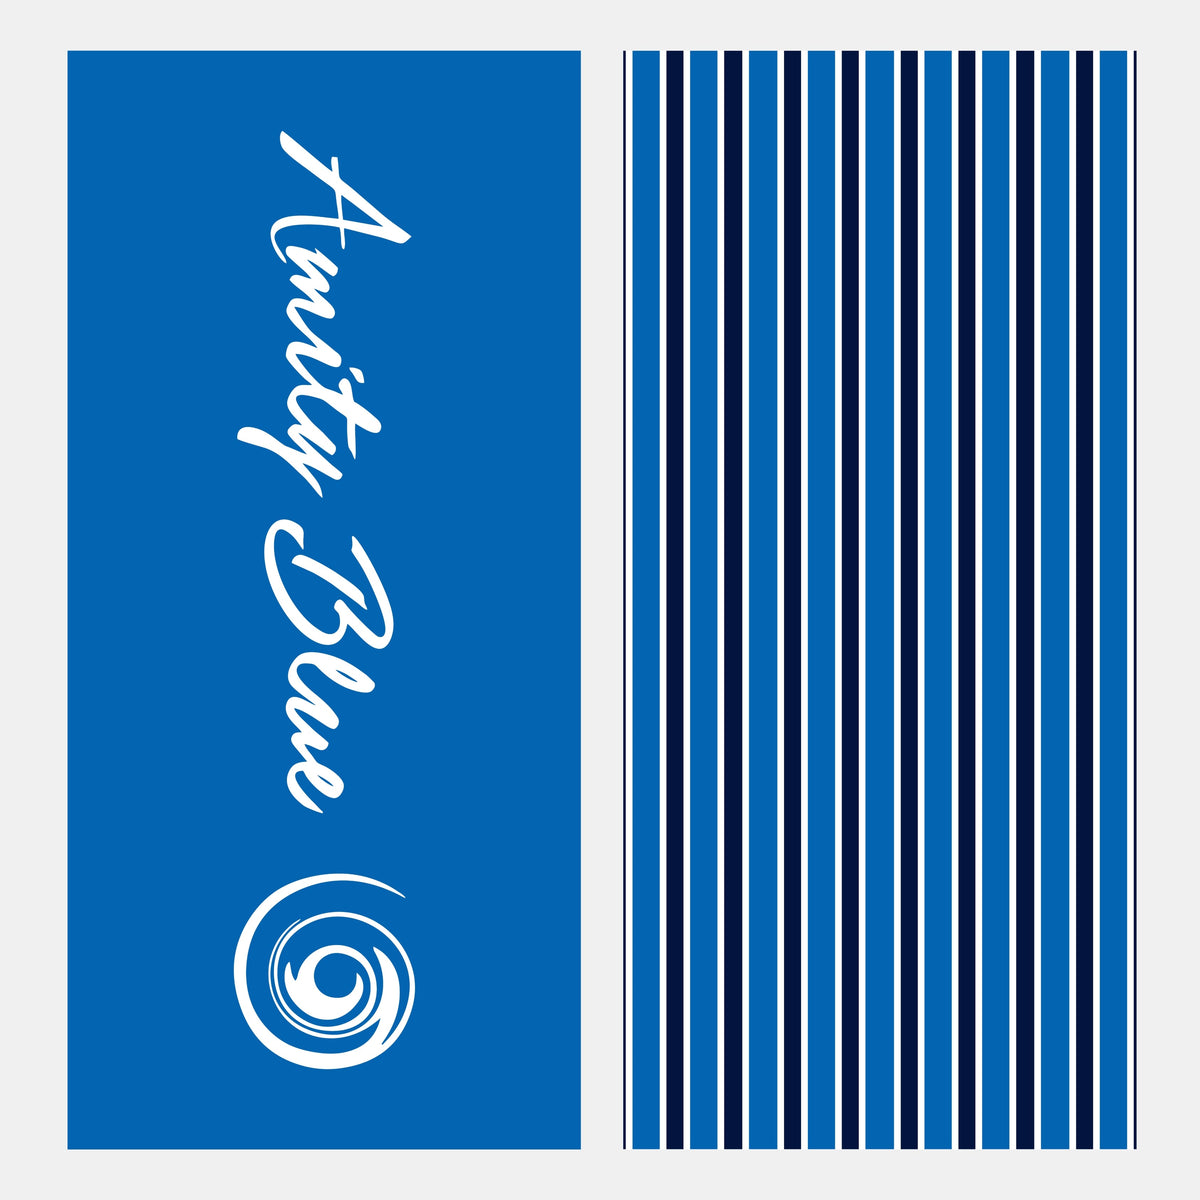 Blue Stripe Beach Towel - Amity Blue